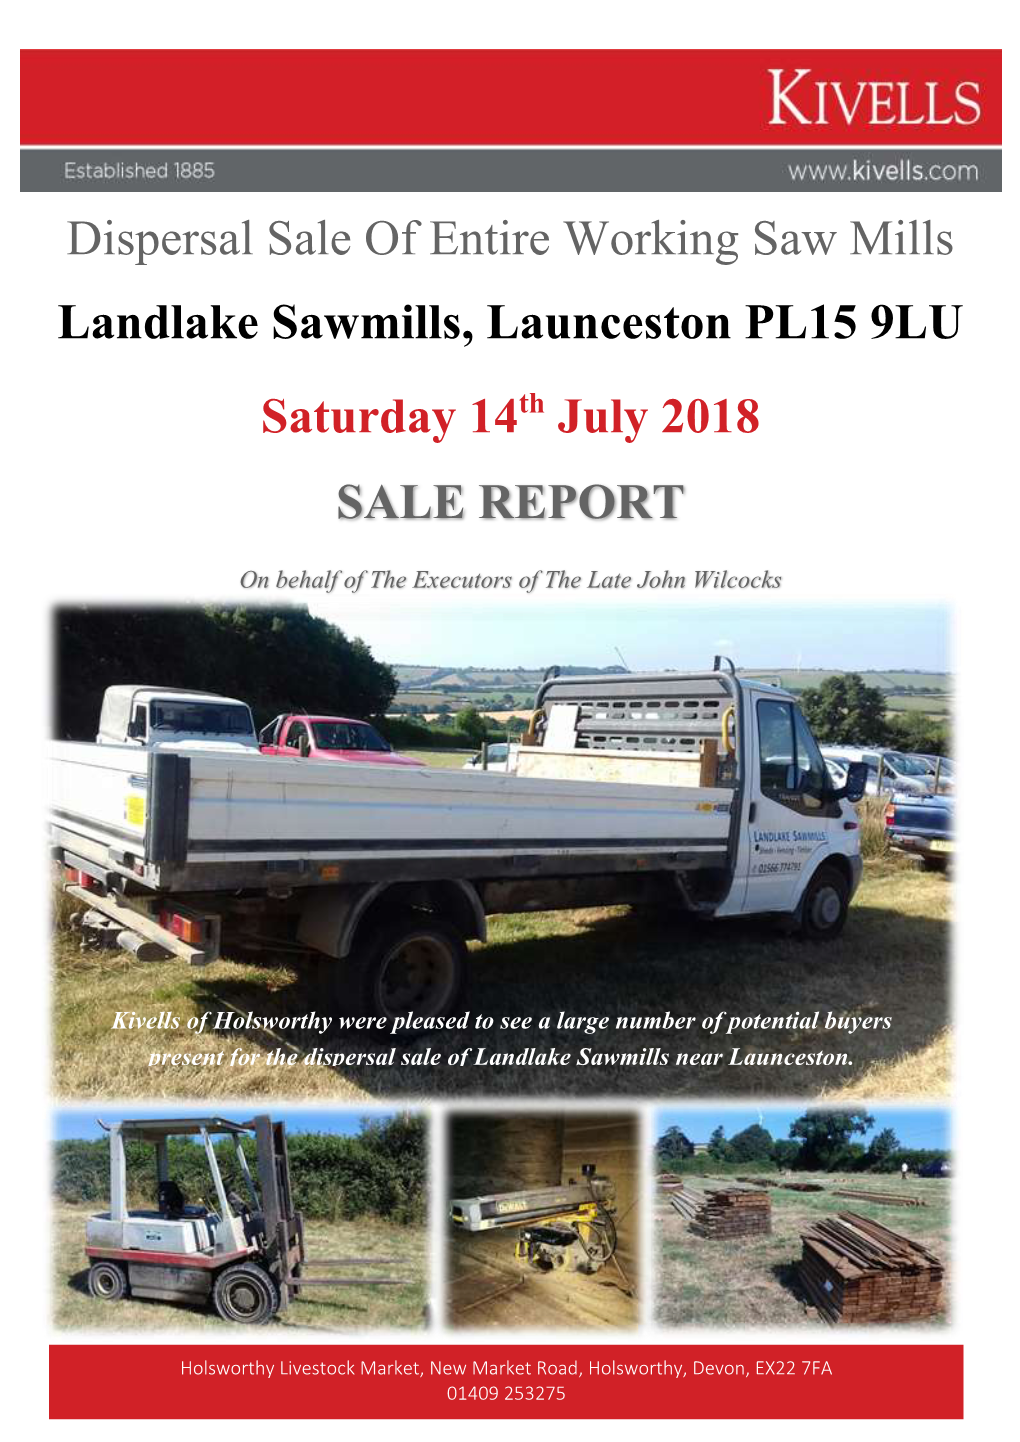 Dispersal Sale of Entire Working Saw Mills Landlake Sawmills, Launceston PL15 9LU Saturday 14Th July 2018 SALE REPORT